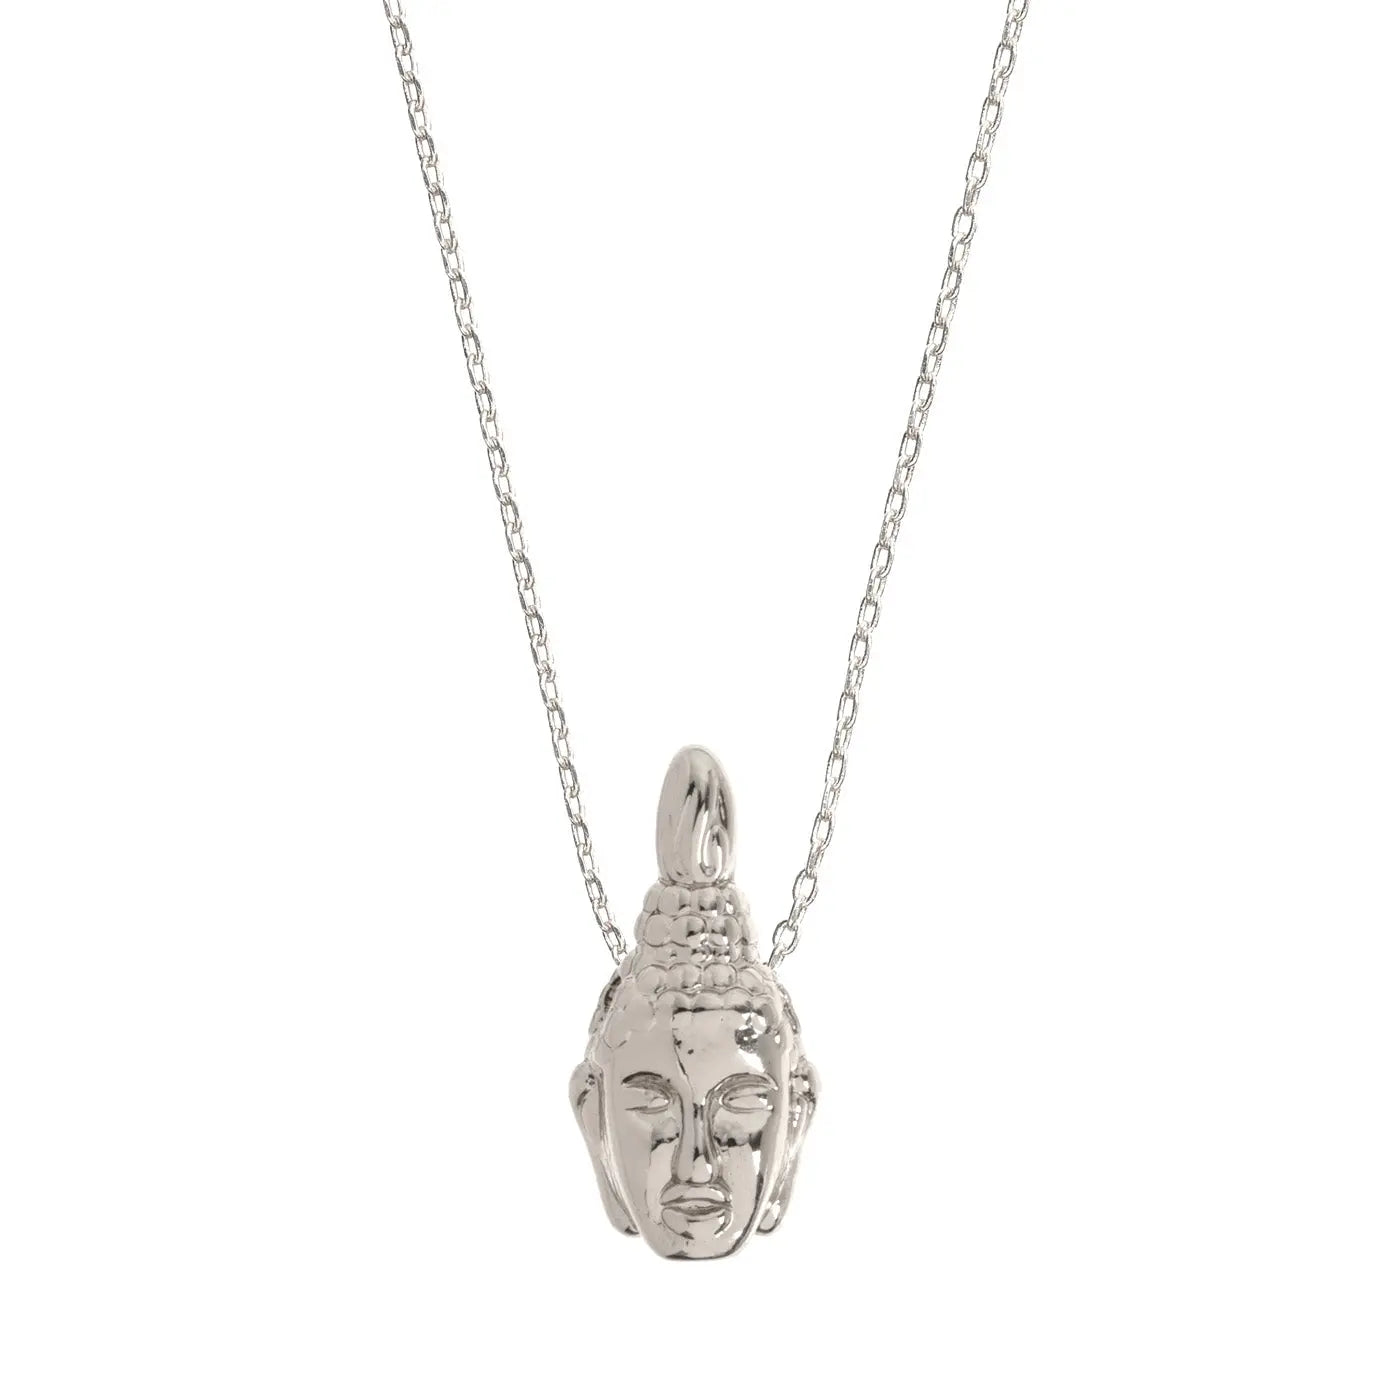 Oxidized Silver Buddha Head Pendant on Chain - Maui Hands